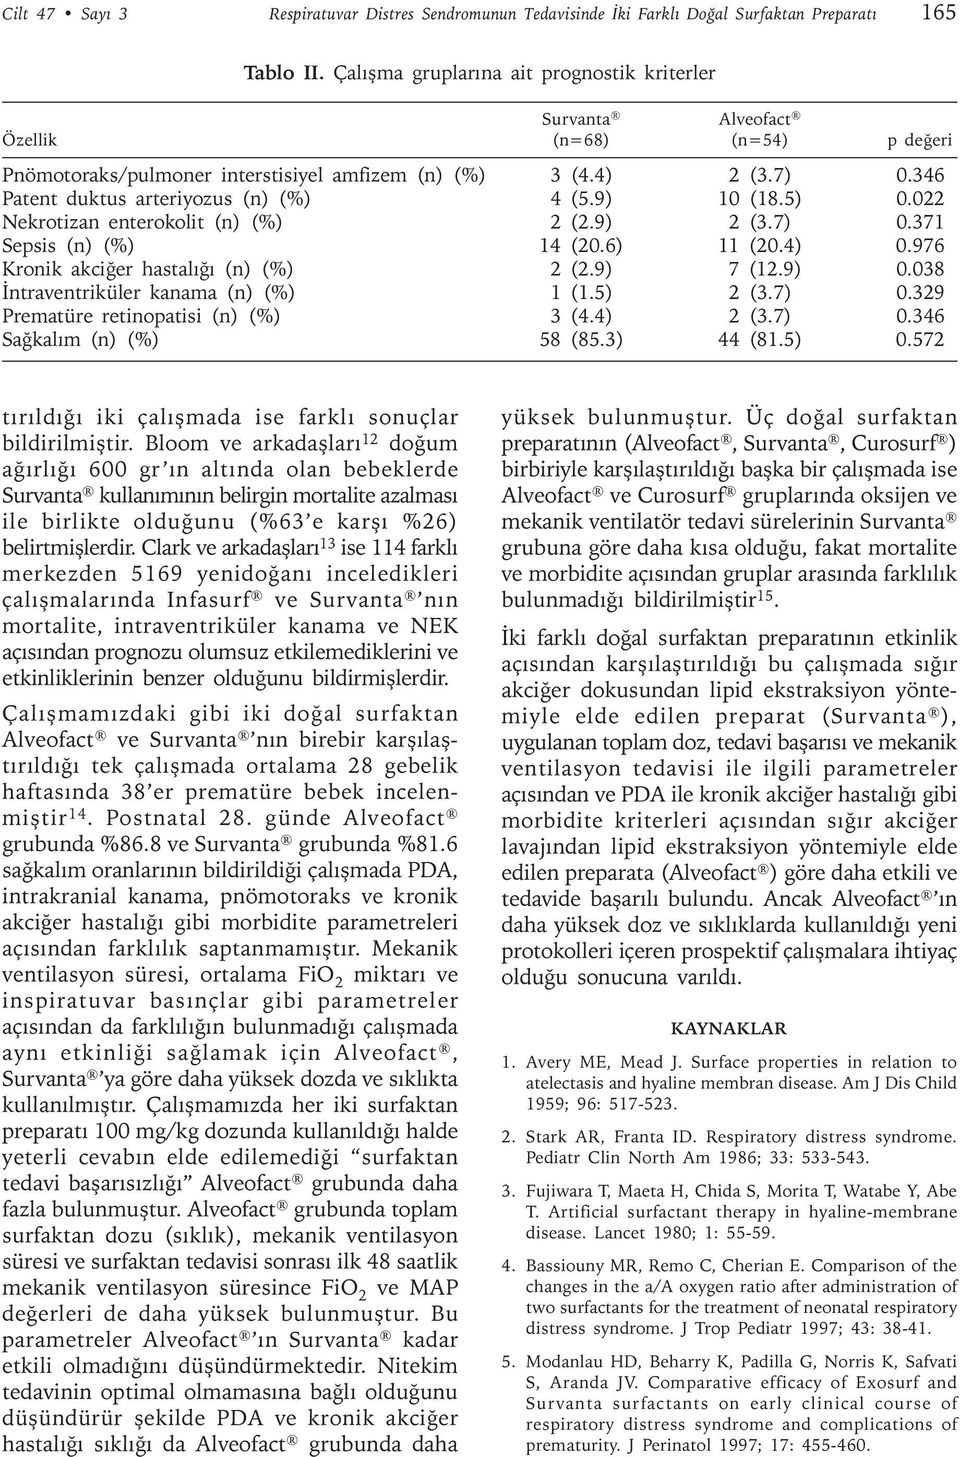 346 Patent duktus arteriyozus (n) (%) 4 (5.9) 10 (18.5) 0.022 Nekrotizan enterokolit (n) (%) 2 (2.9) 2 (3.7) 0.371 Sepsis (n) (%) 14 (20.6) 11 (20.4) 0.976 Kronik akciðer hastalýðý (n) (%) 2 (2.